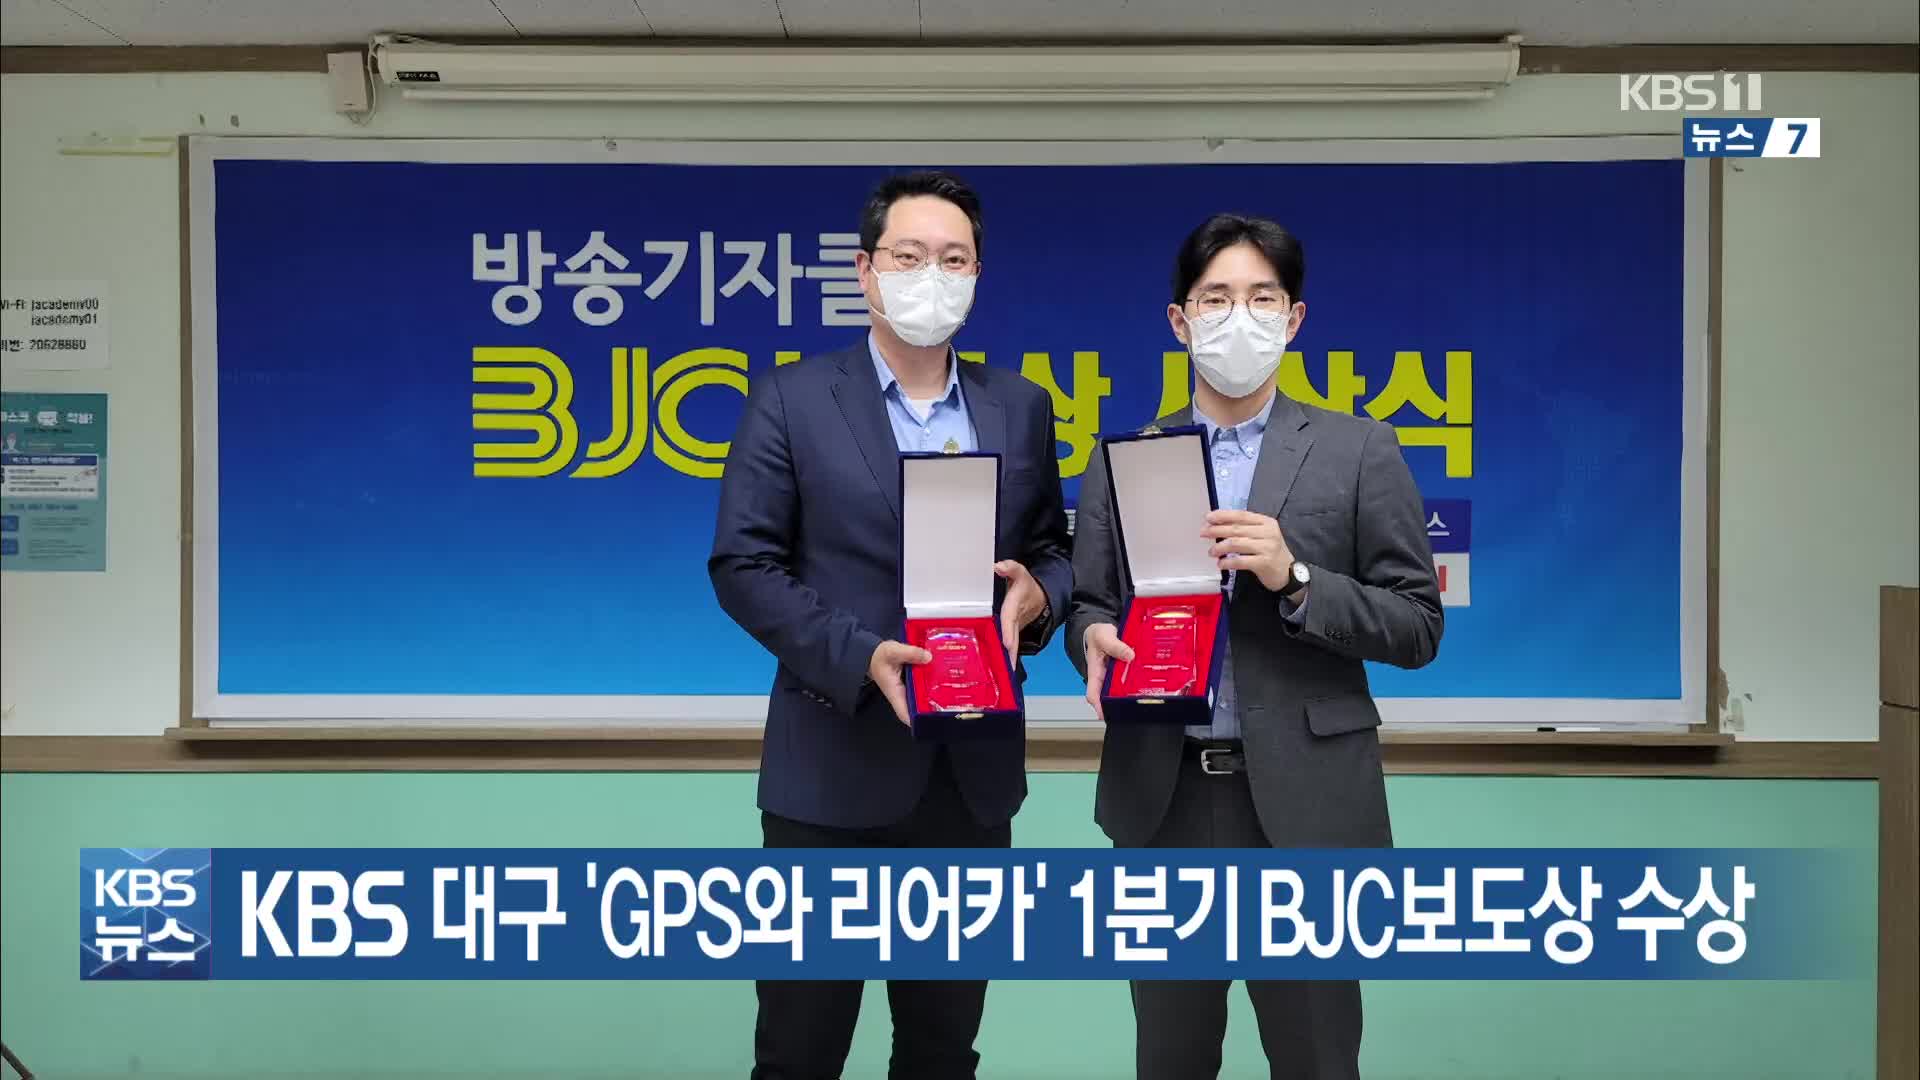 KBS 대구 ‘GPS와 리어카’ 1분기 BJC보도상 수상